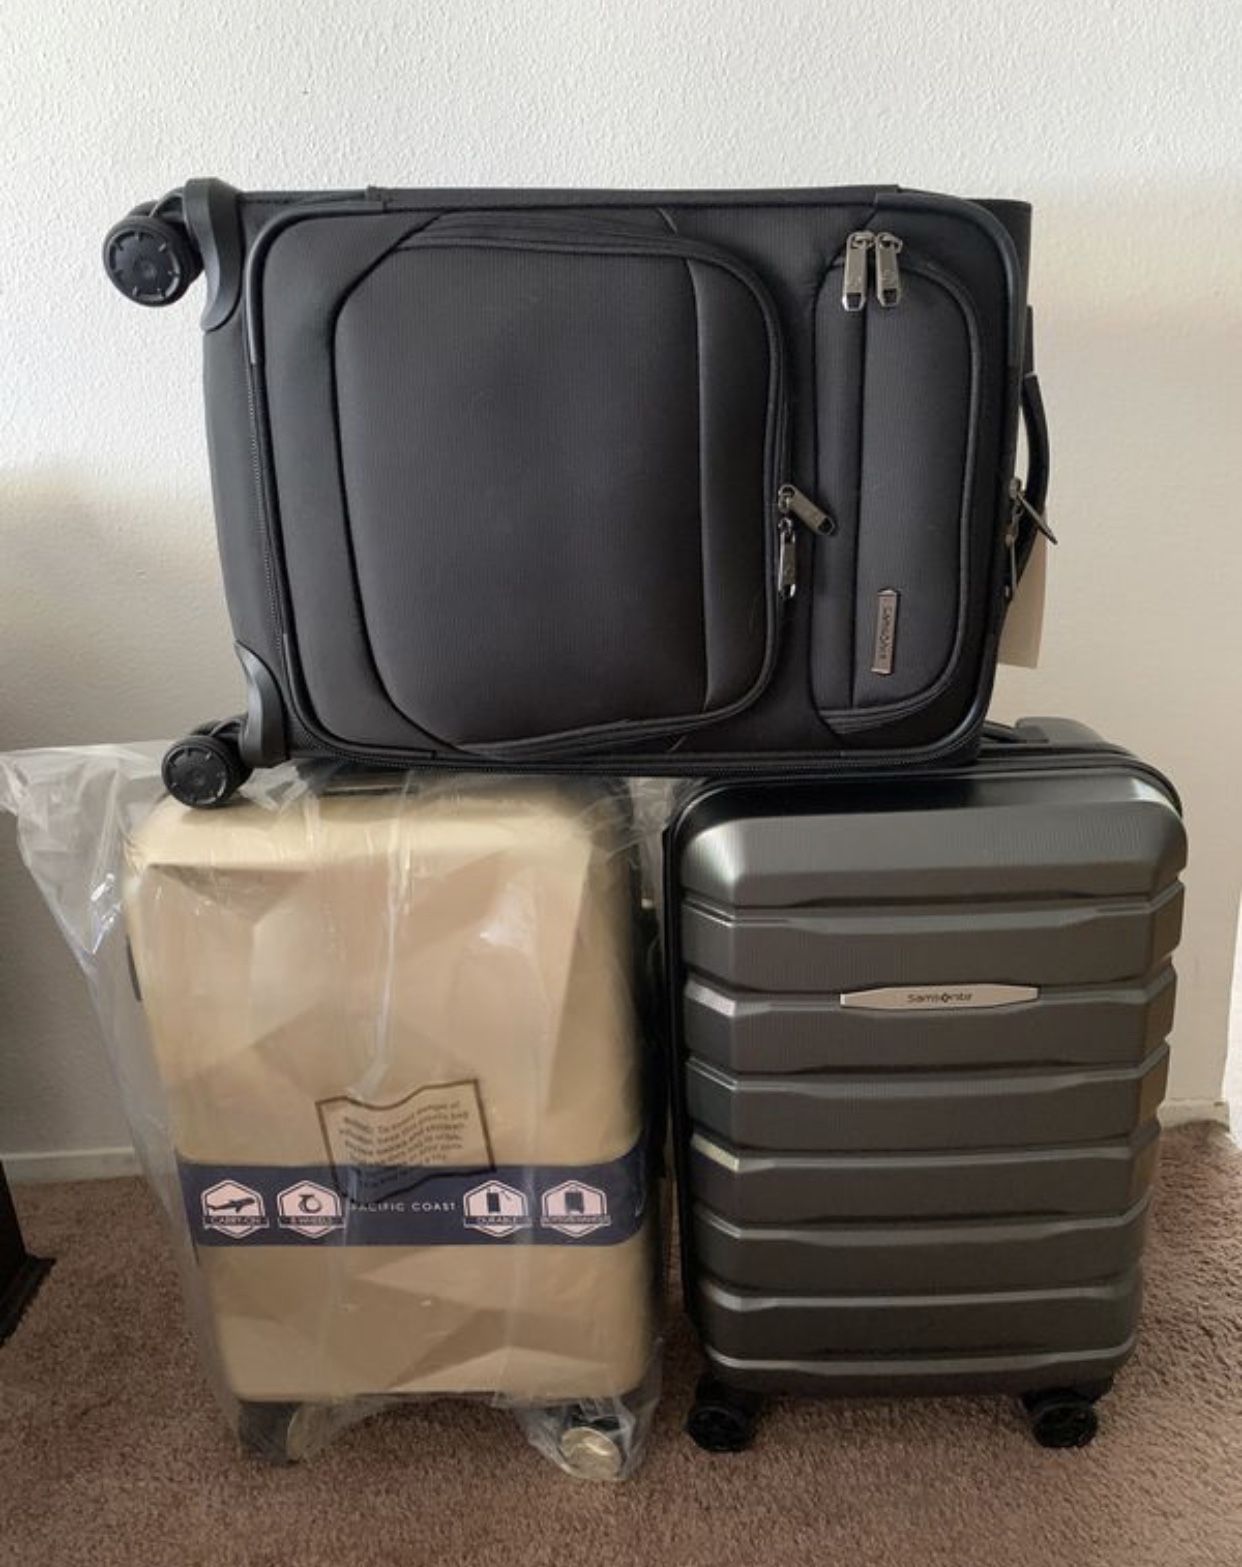 $30 each price firm hardshell soft case spinner carry on 22” bag suitcase luggage maleta baggagem